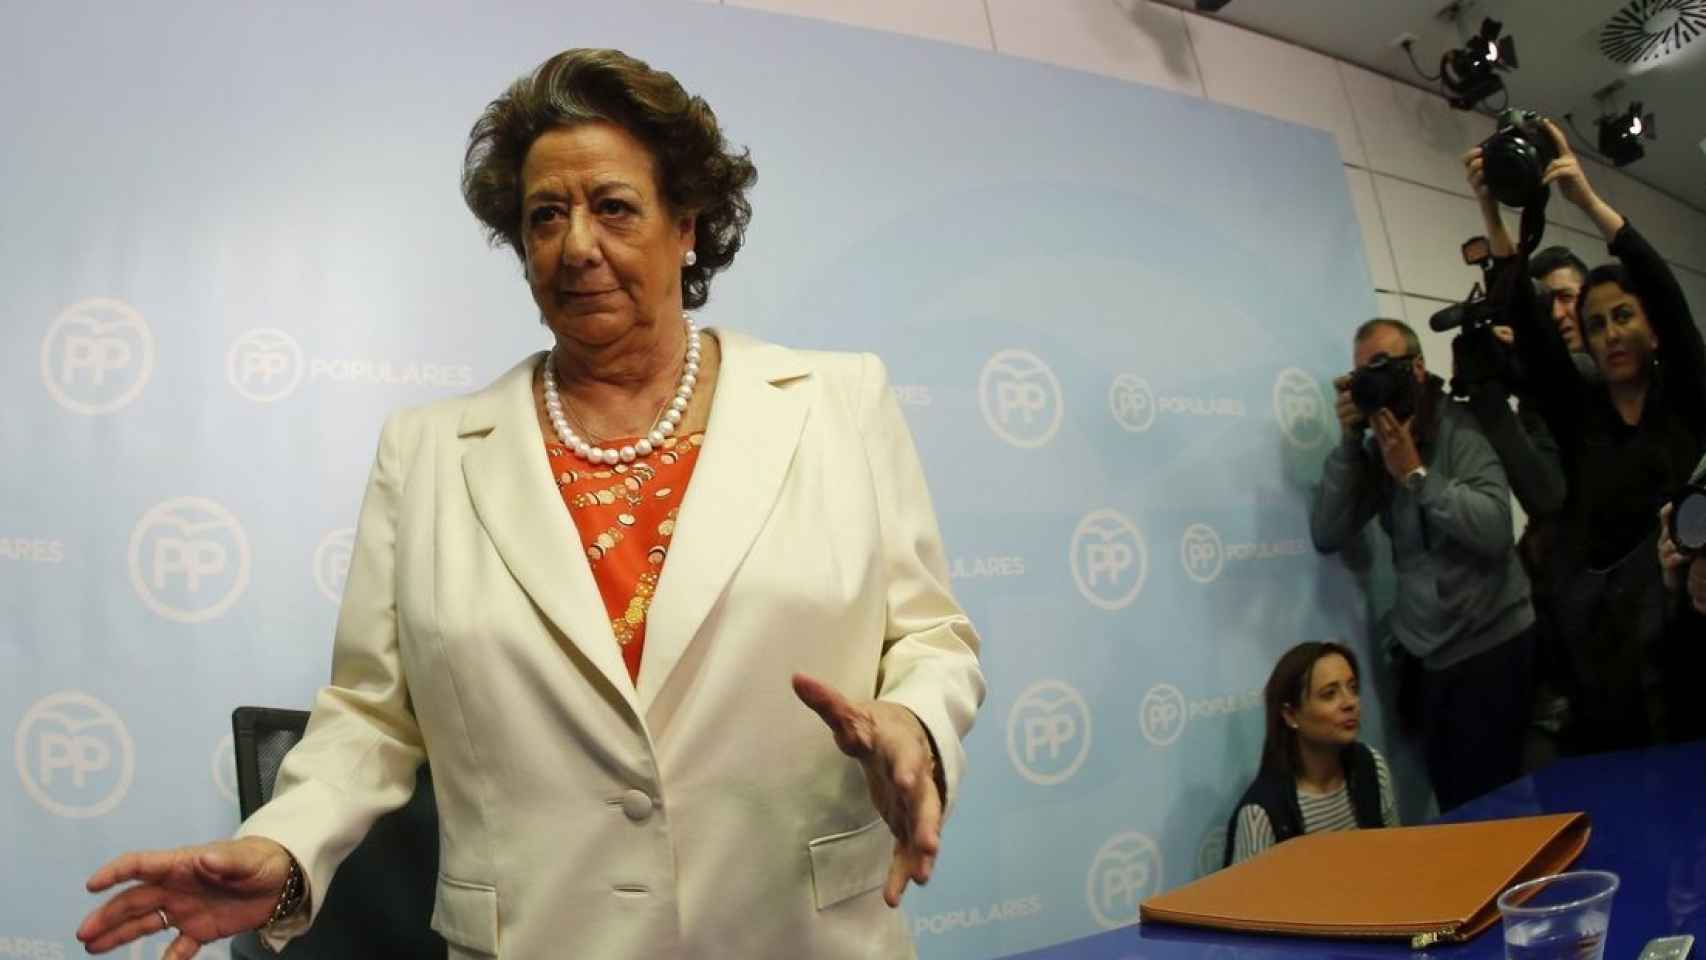 Rita Barberá.